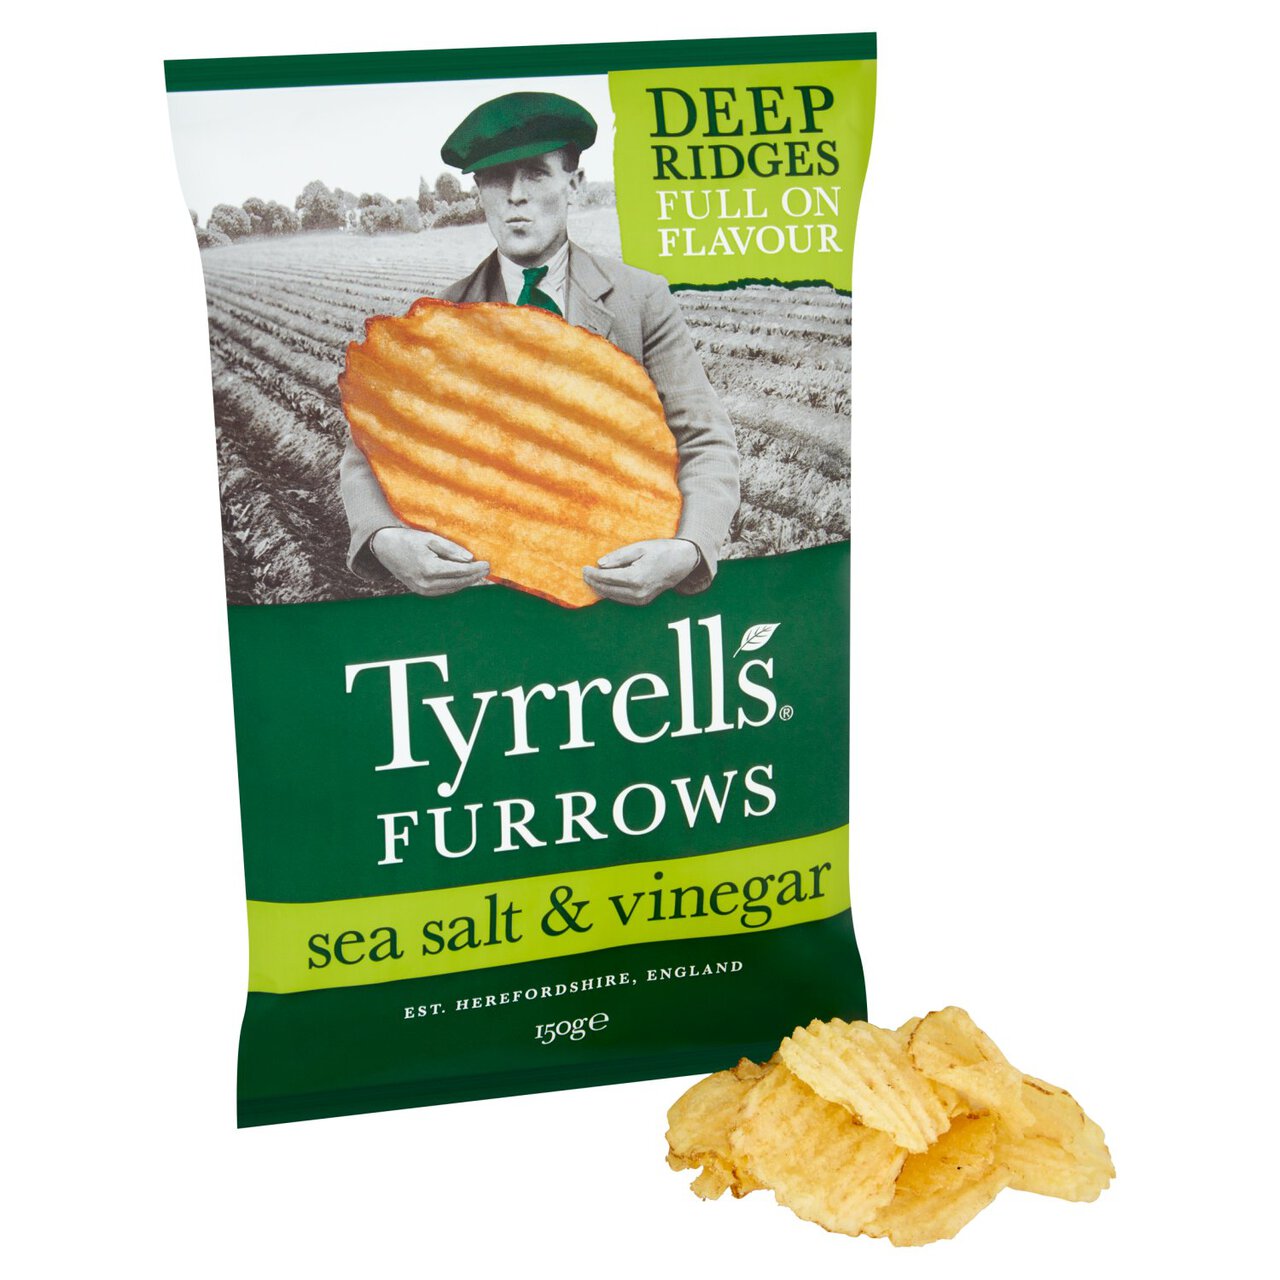 Tyrrells Sea Salt & Vinegar Furrows 150g